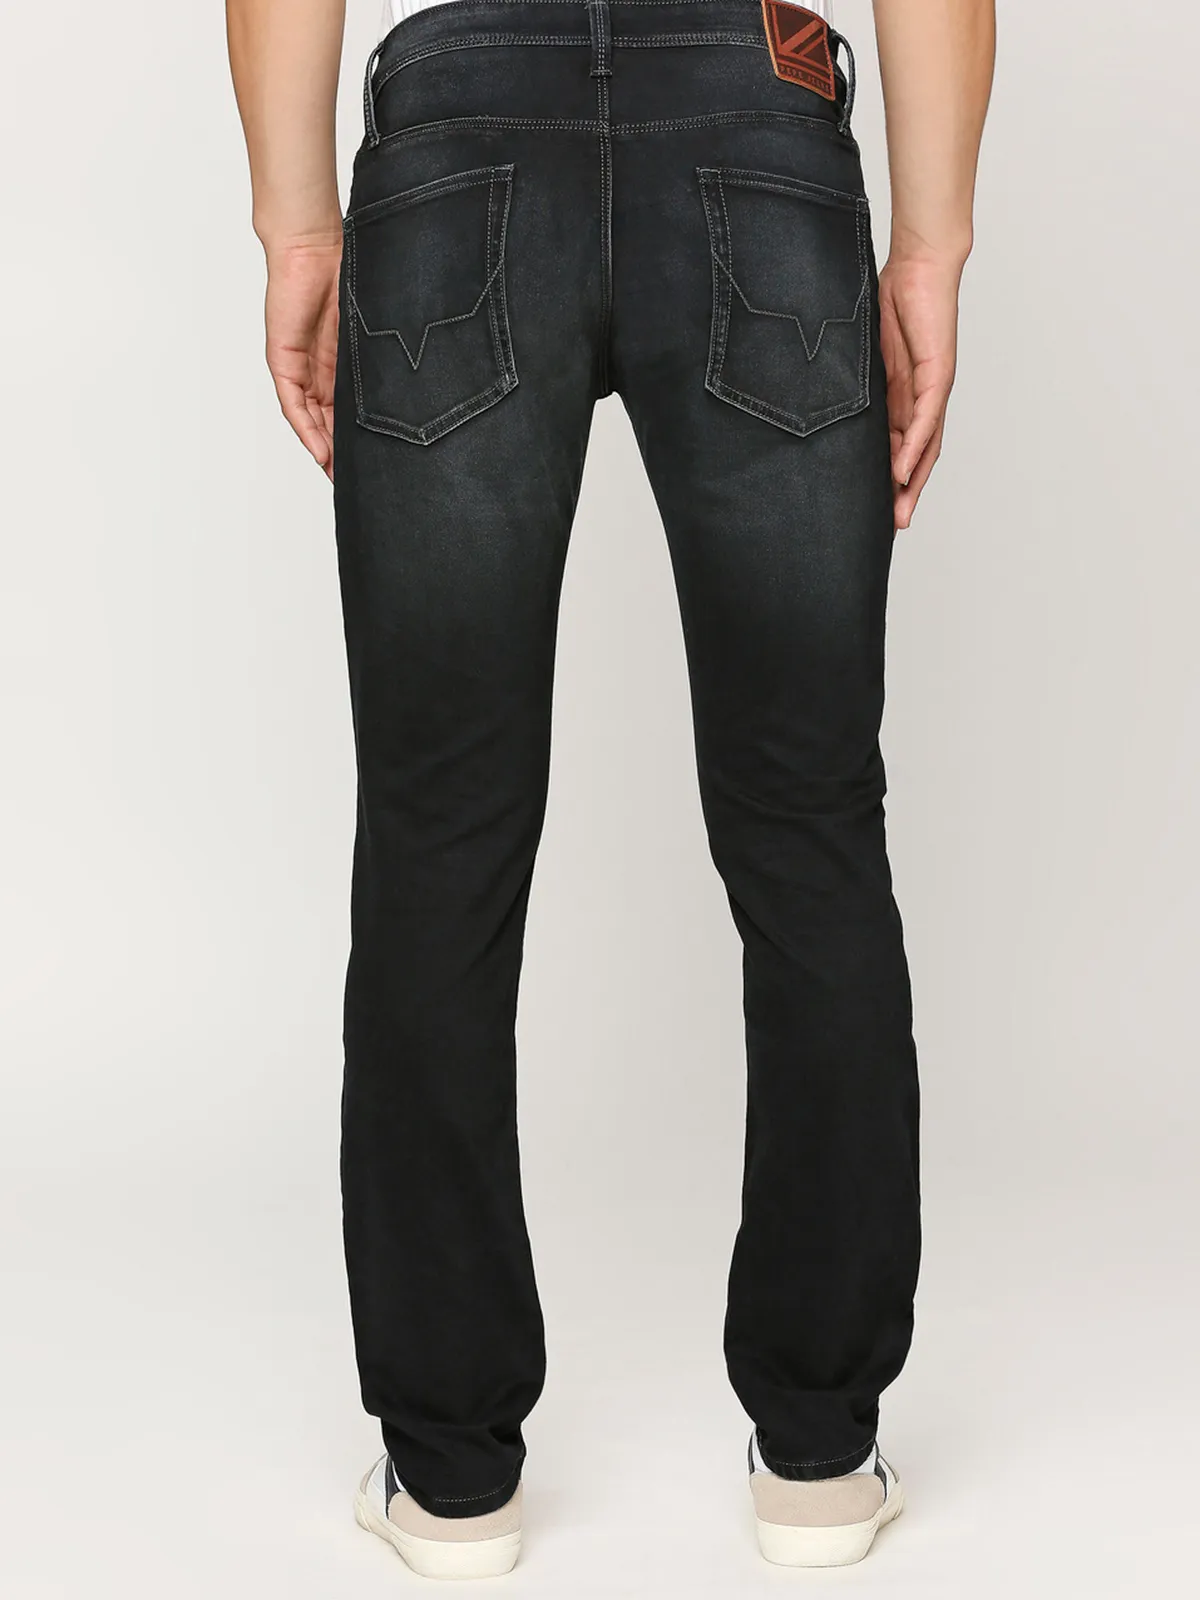 Pepe Jeans black denim slim fit jeans